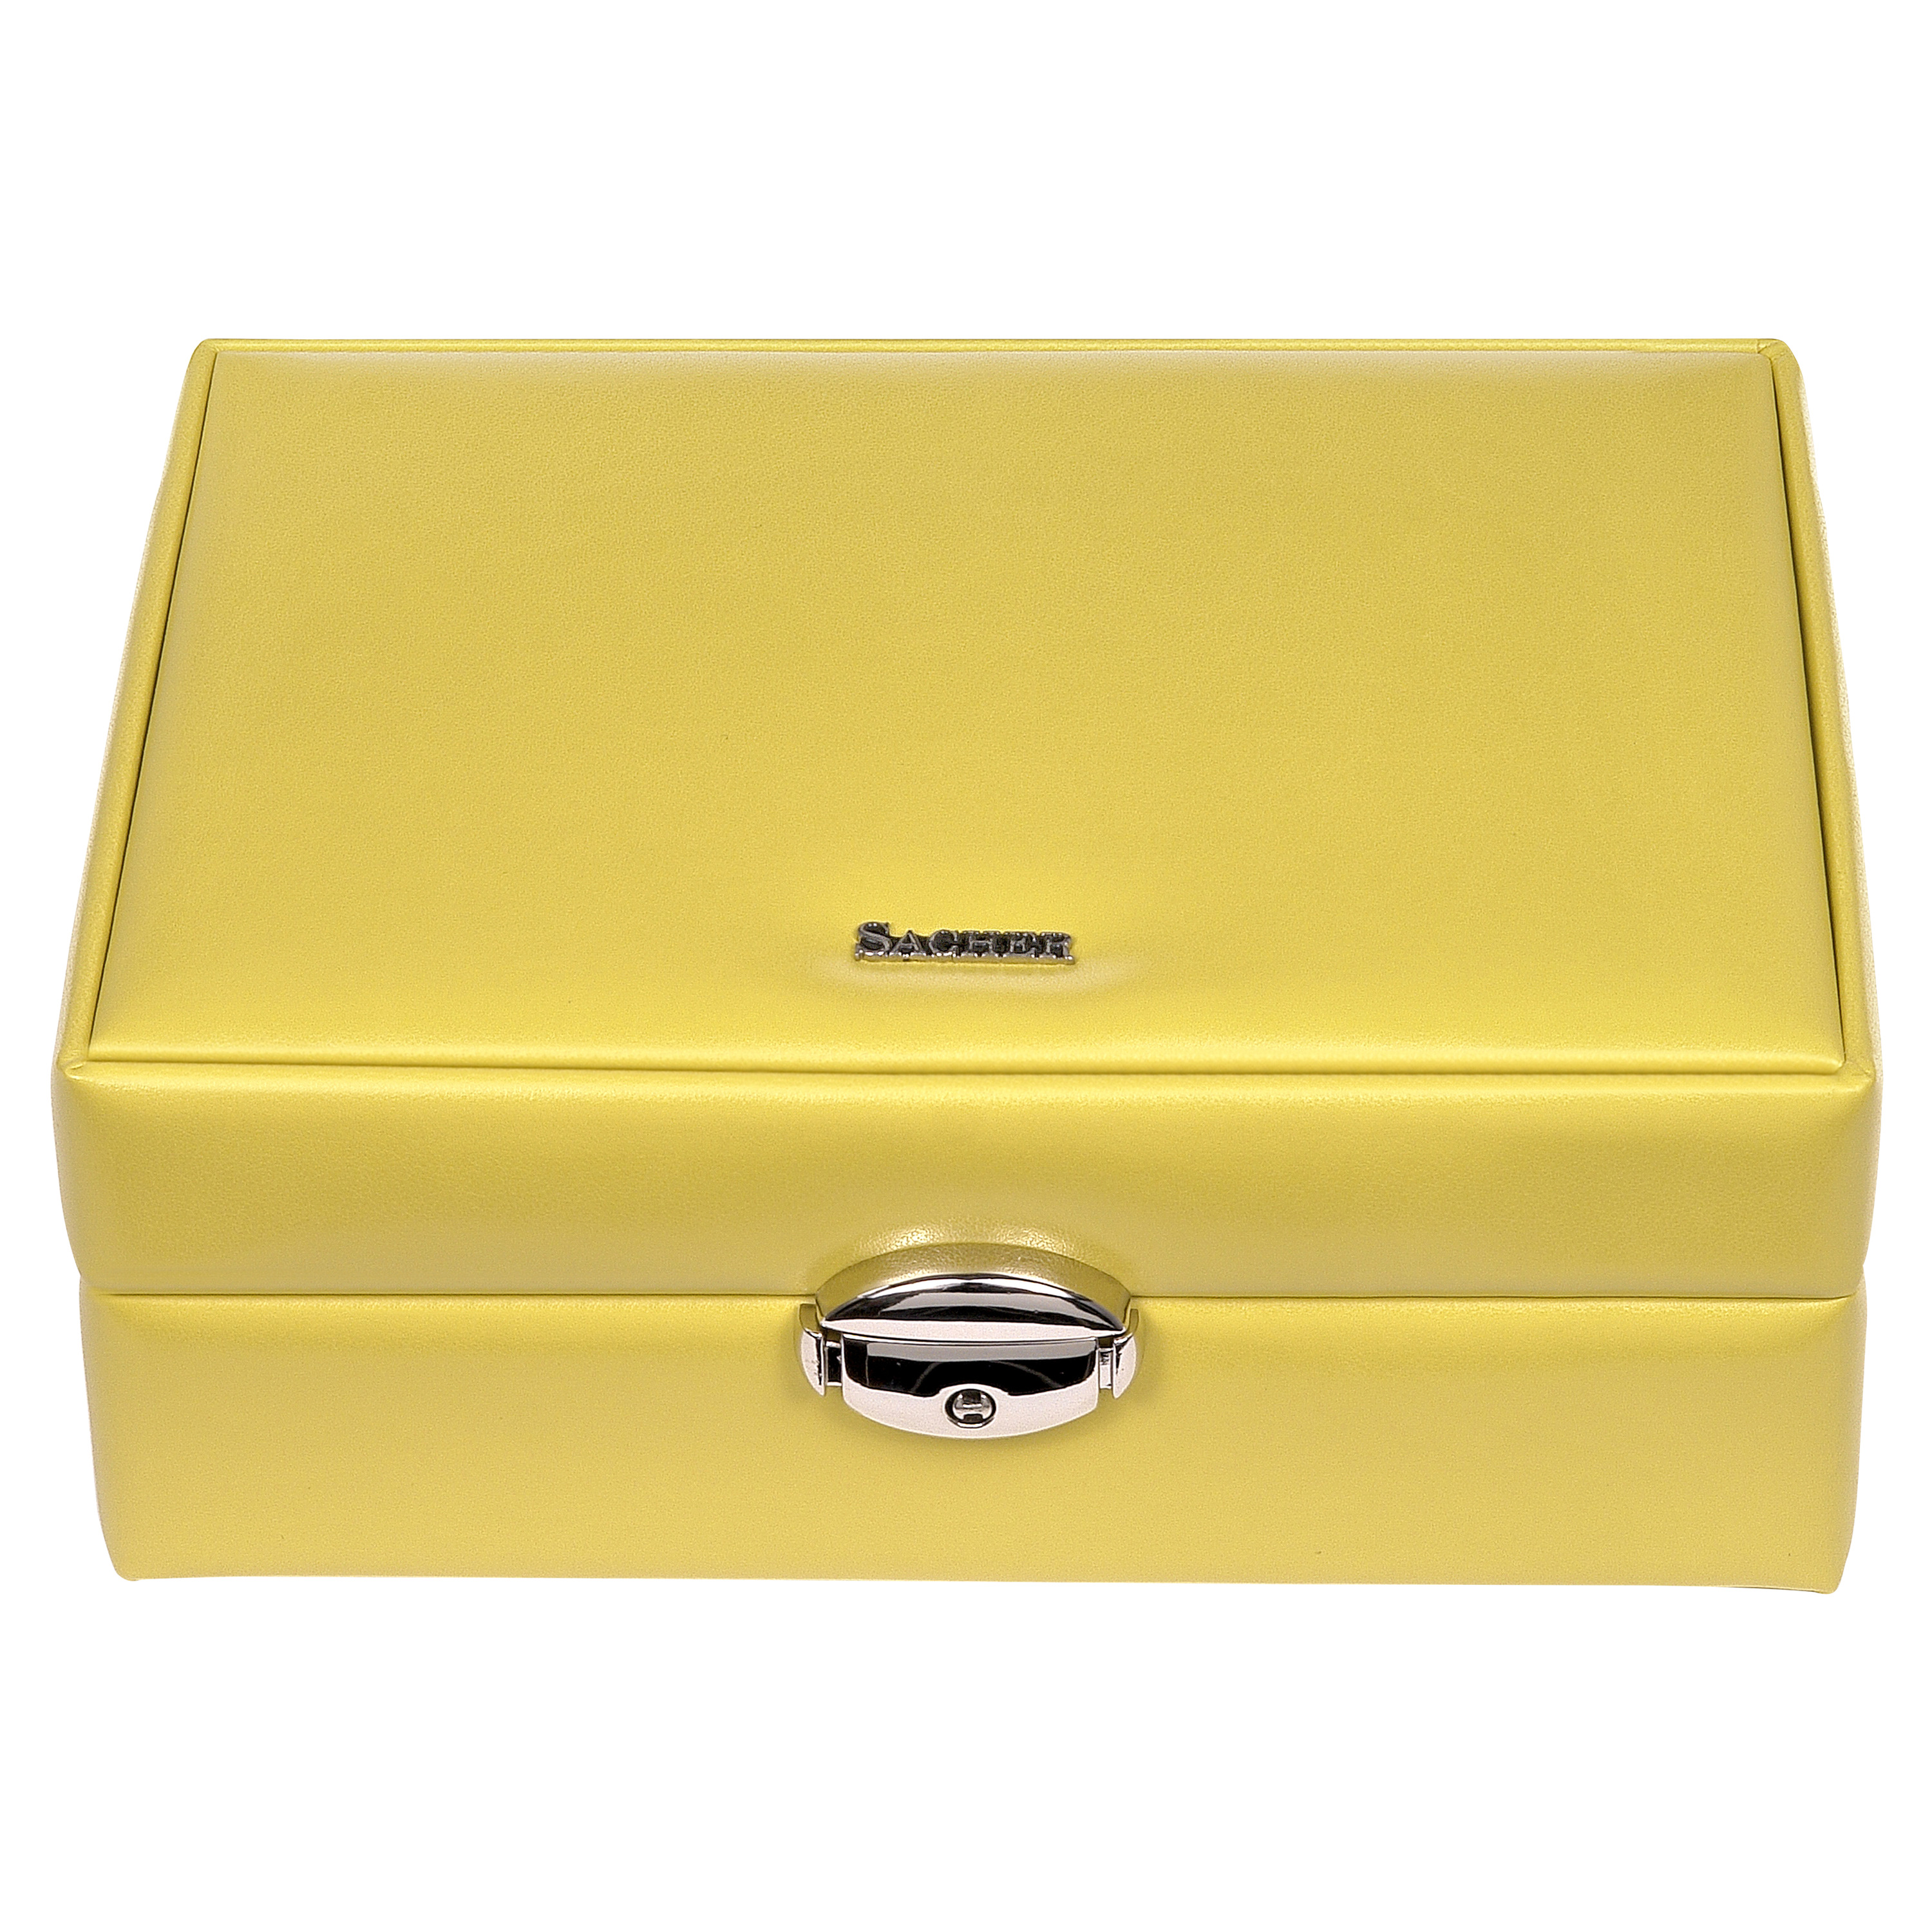 Britta colouranti / lemon jewellery box